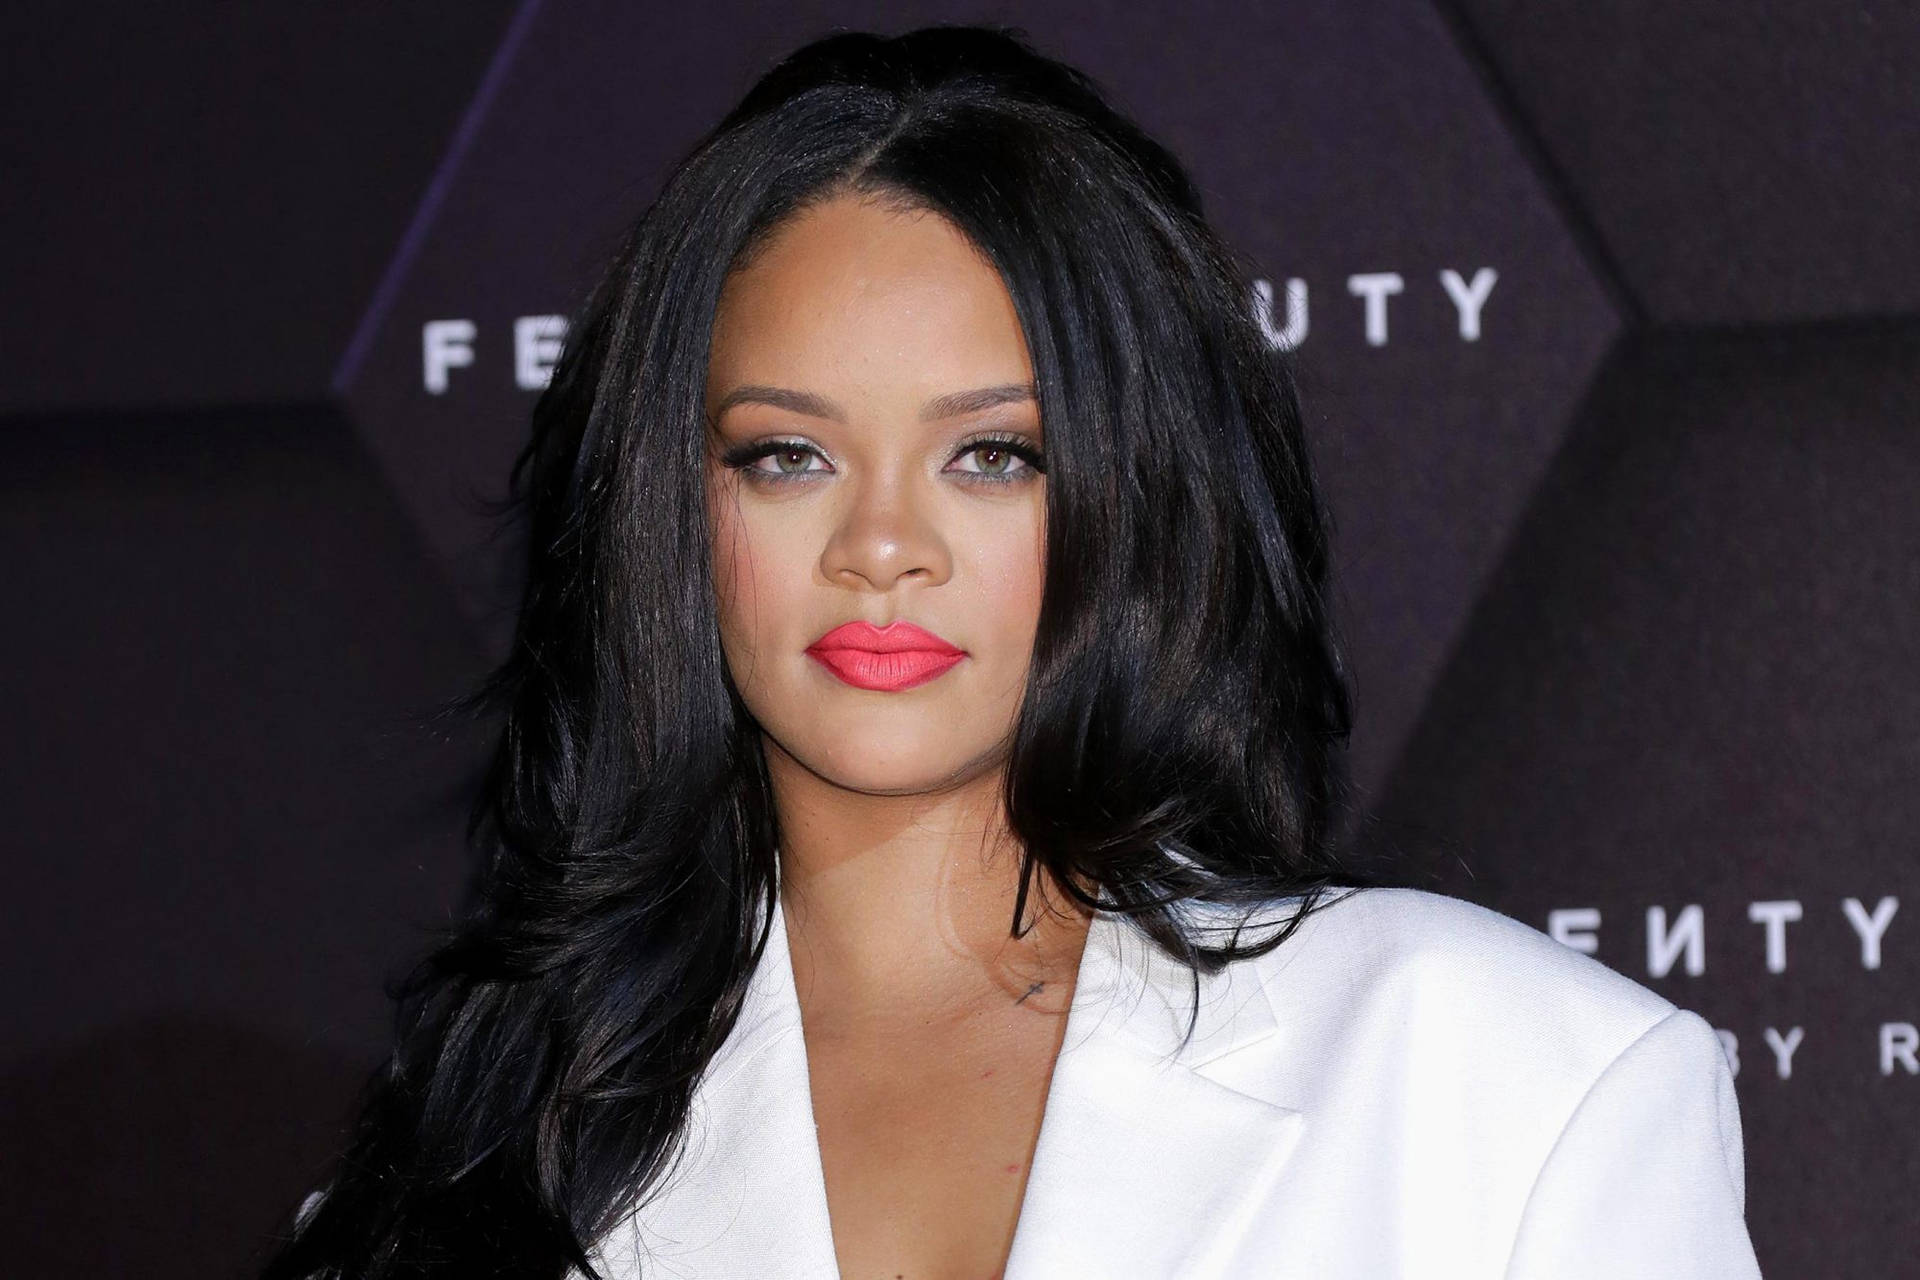 Rihanna is set to launch her first beauty line - Rihanna